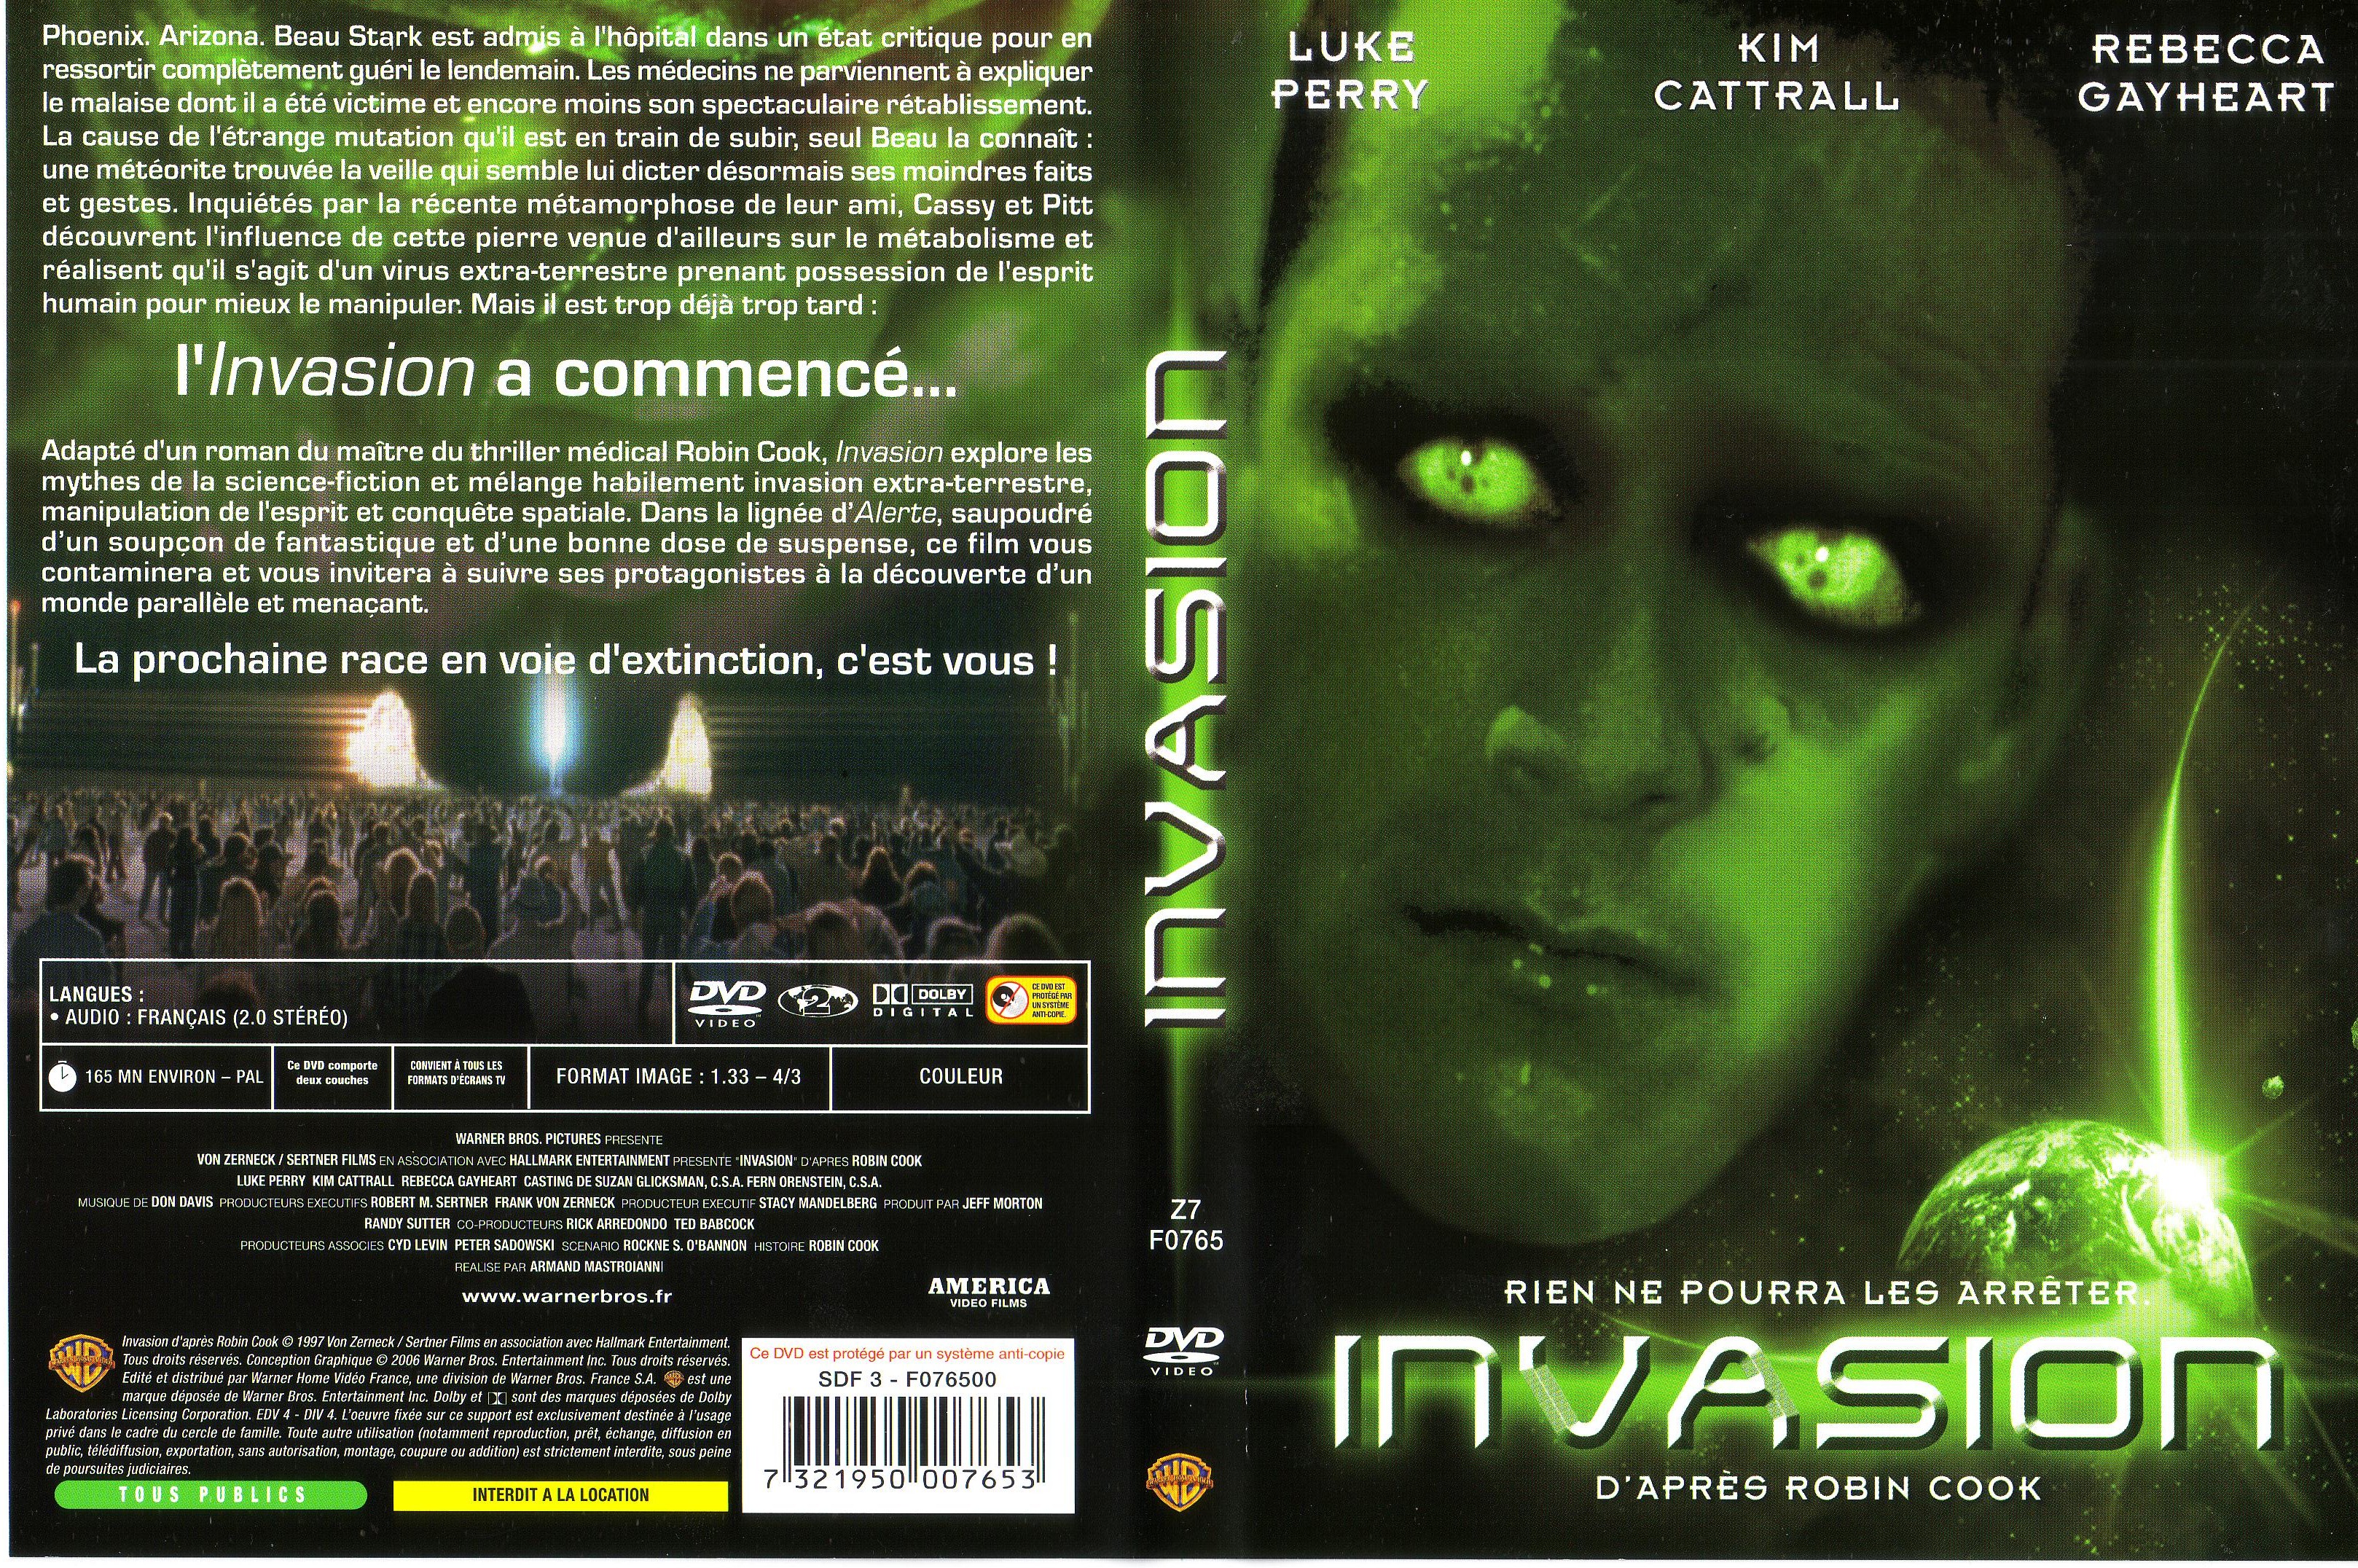 Jaquette DVD Invasion (1997)